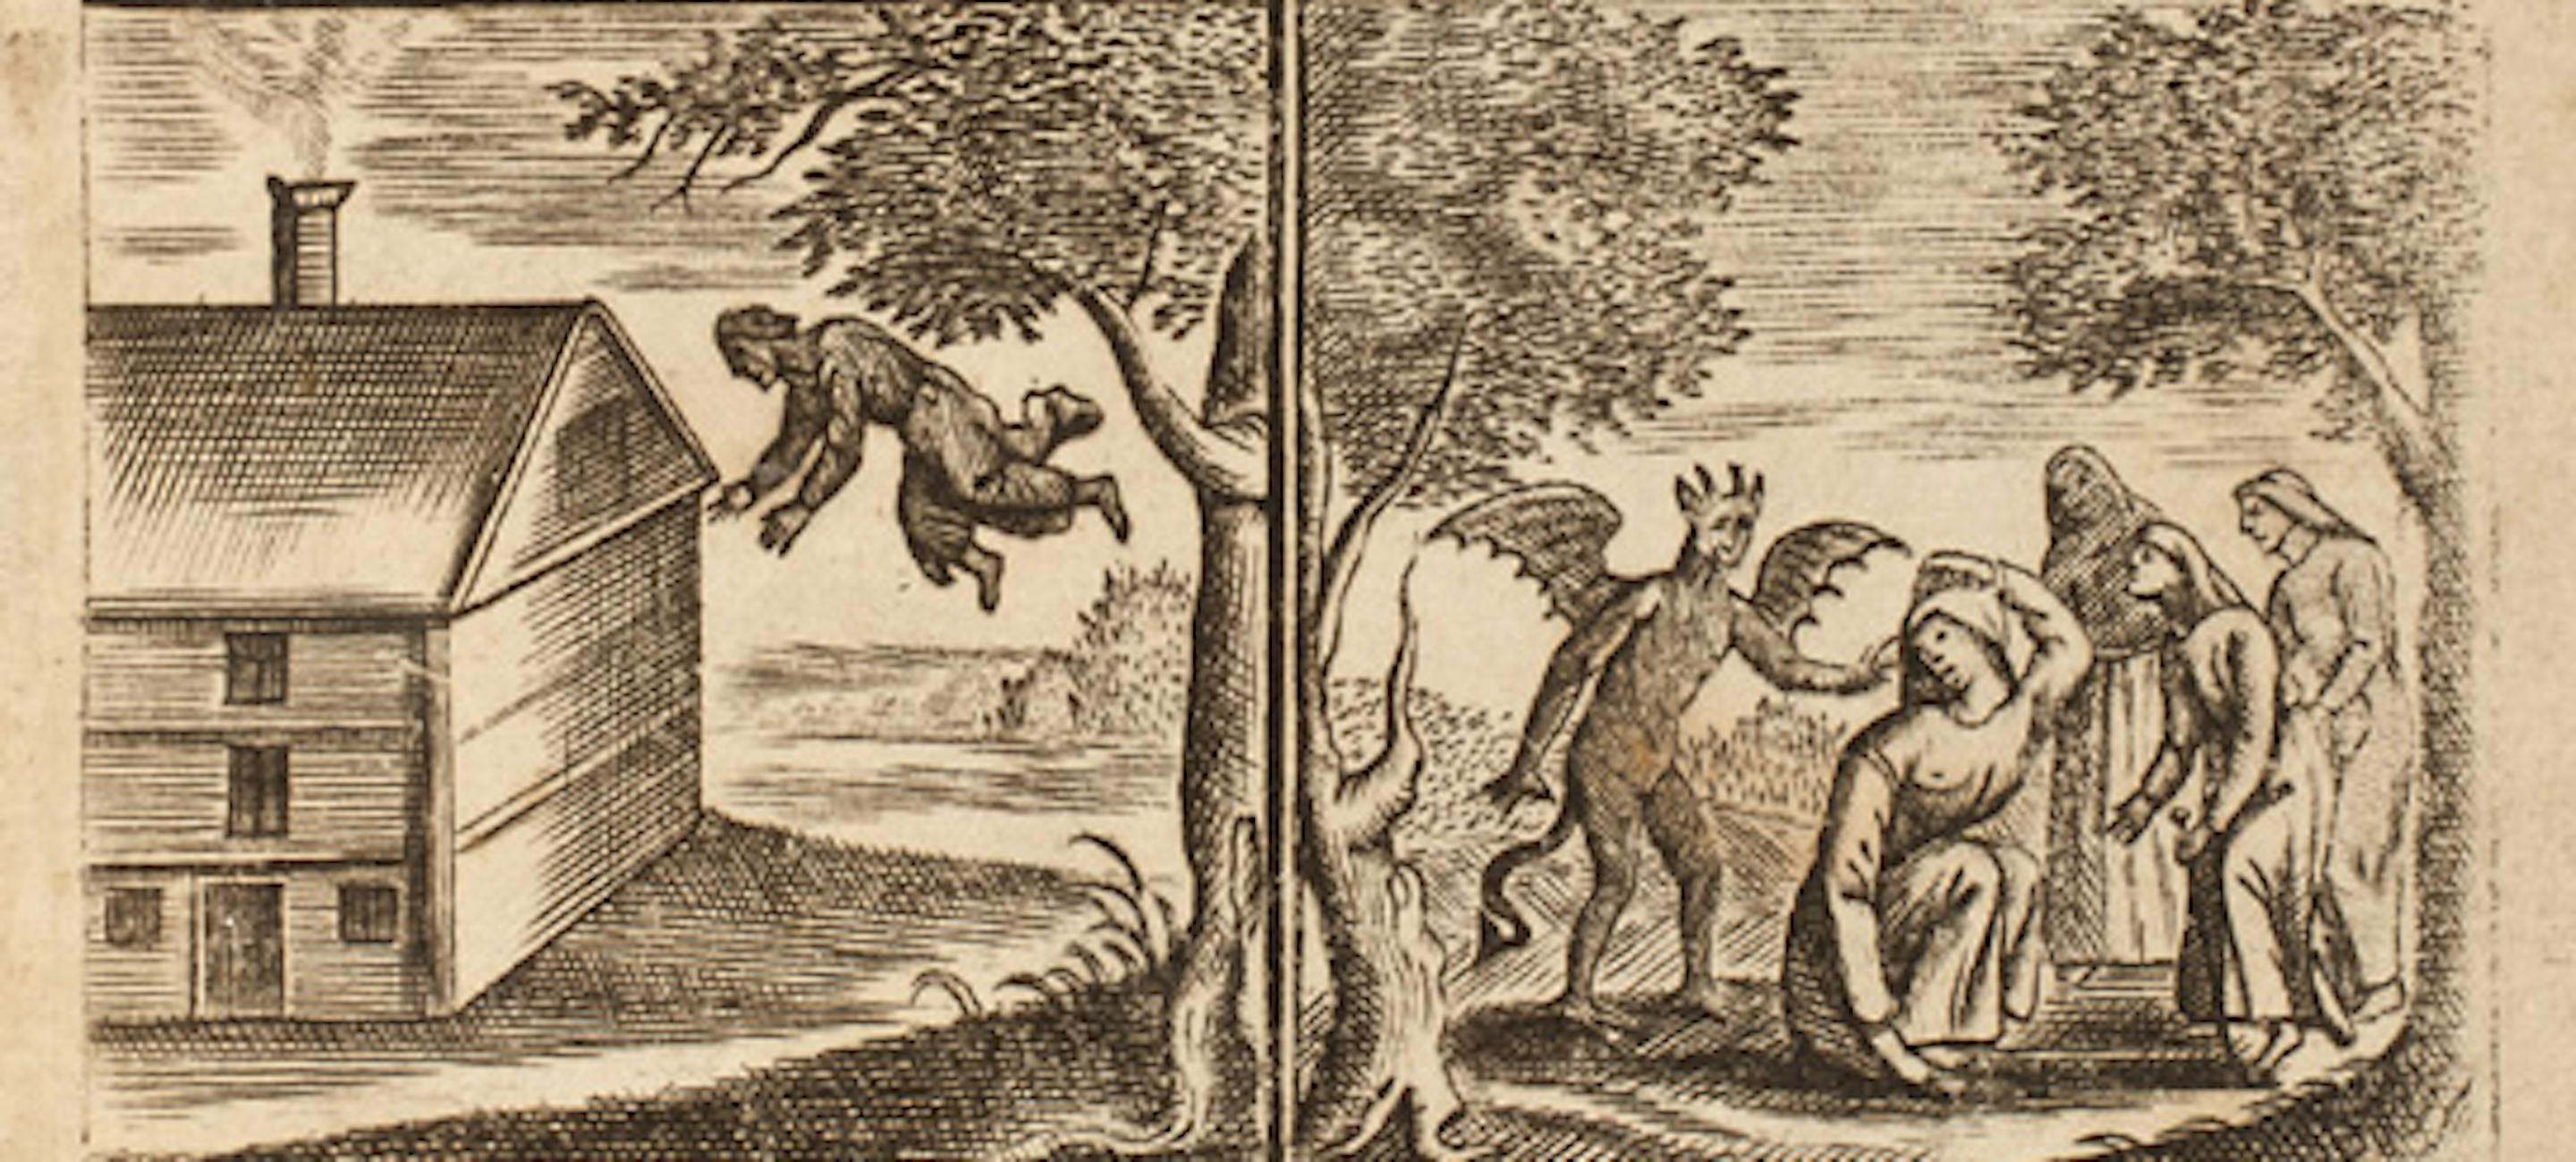 Joseph Glanvill (1636-1680)
Saducismus Triumphatus
London: 1700
Patricia D. Klingenstein Library
New-York Historical Society